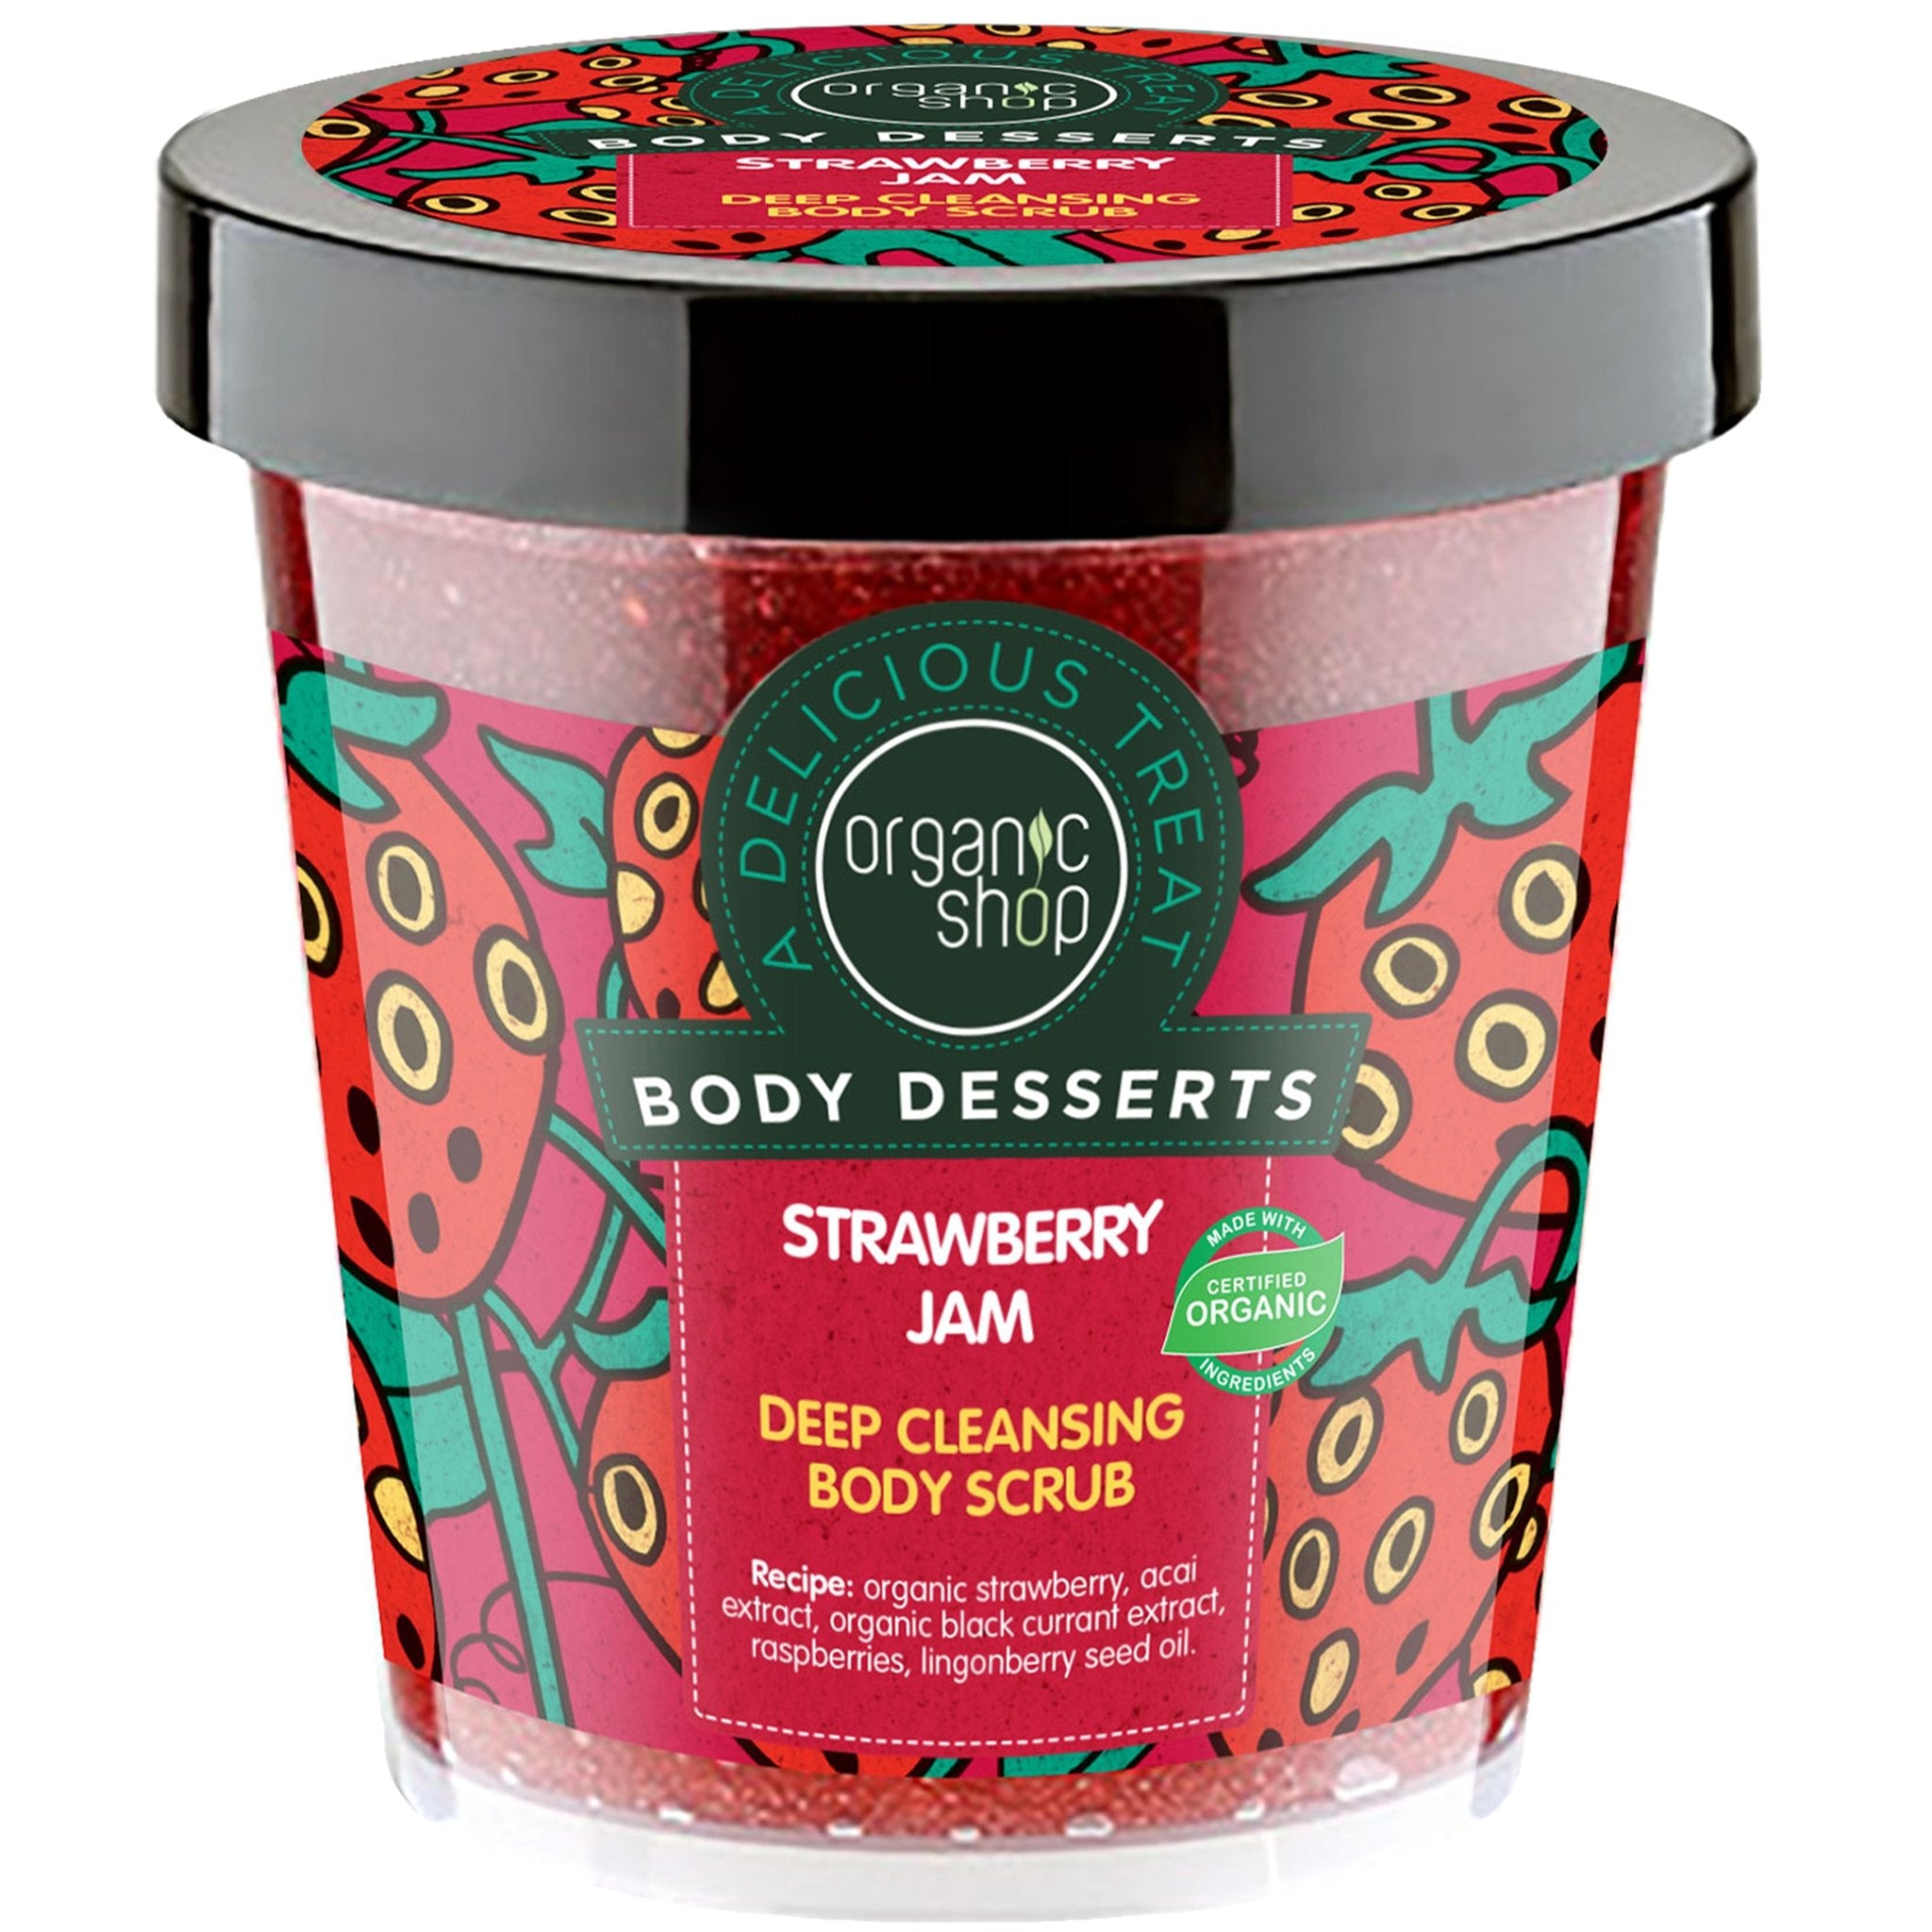 Body Desserts Strawberry Jam Deep Cleansing Body Scrub - mypure.co.uk